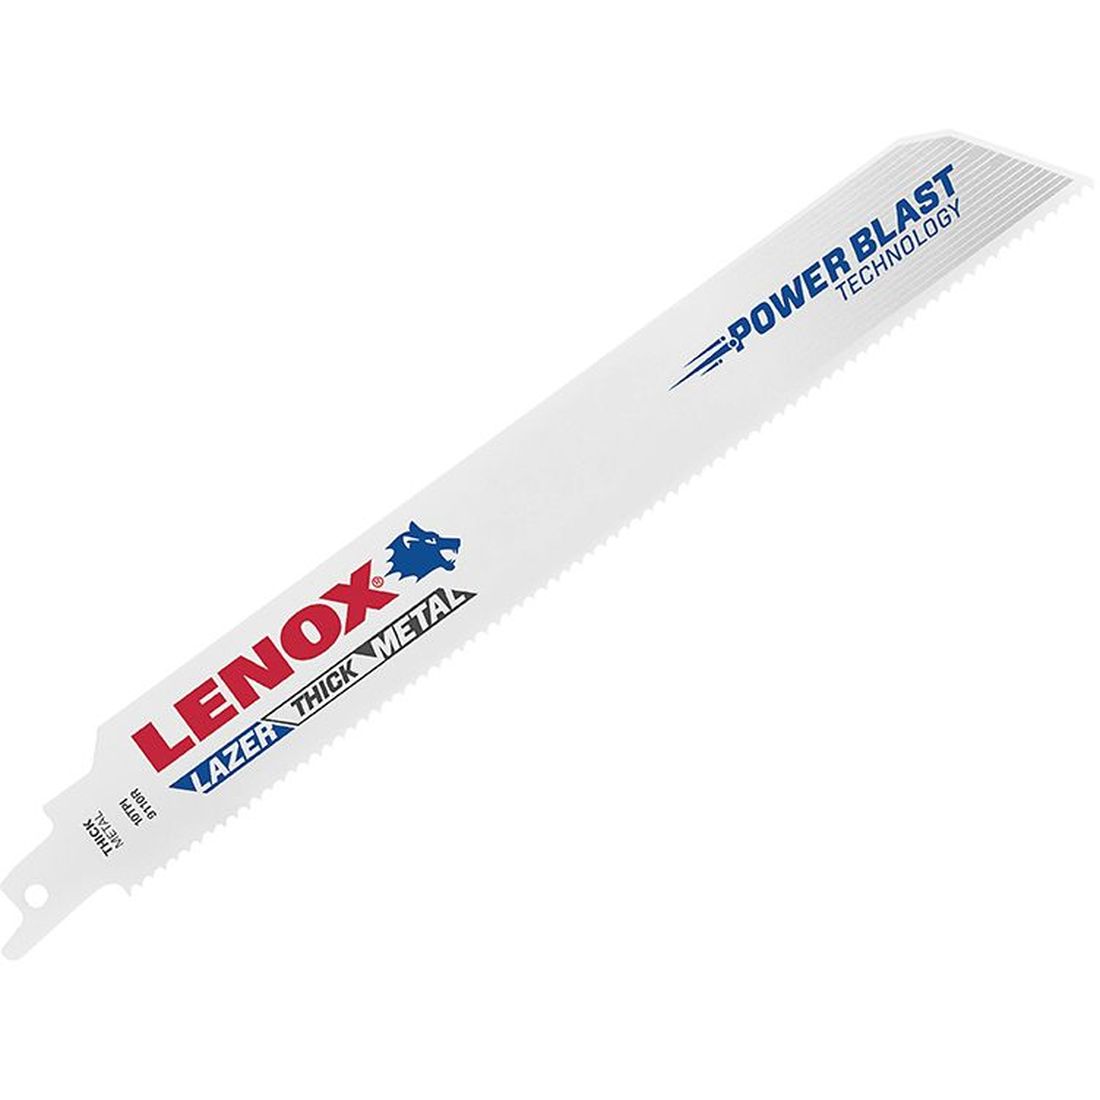 LENOX 201769-110R Steel Cutting Reciprocating Saw Blades 229mm 10 TPI (Pack 5)        